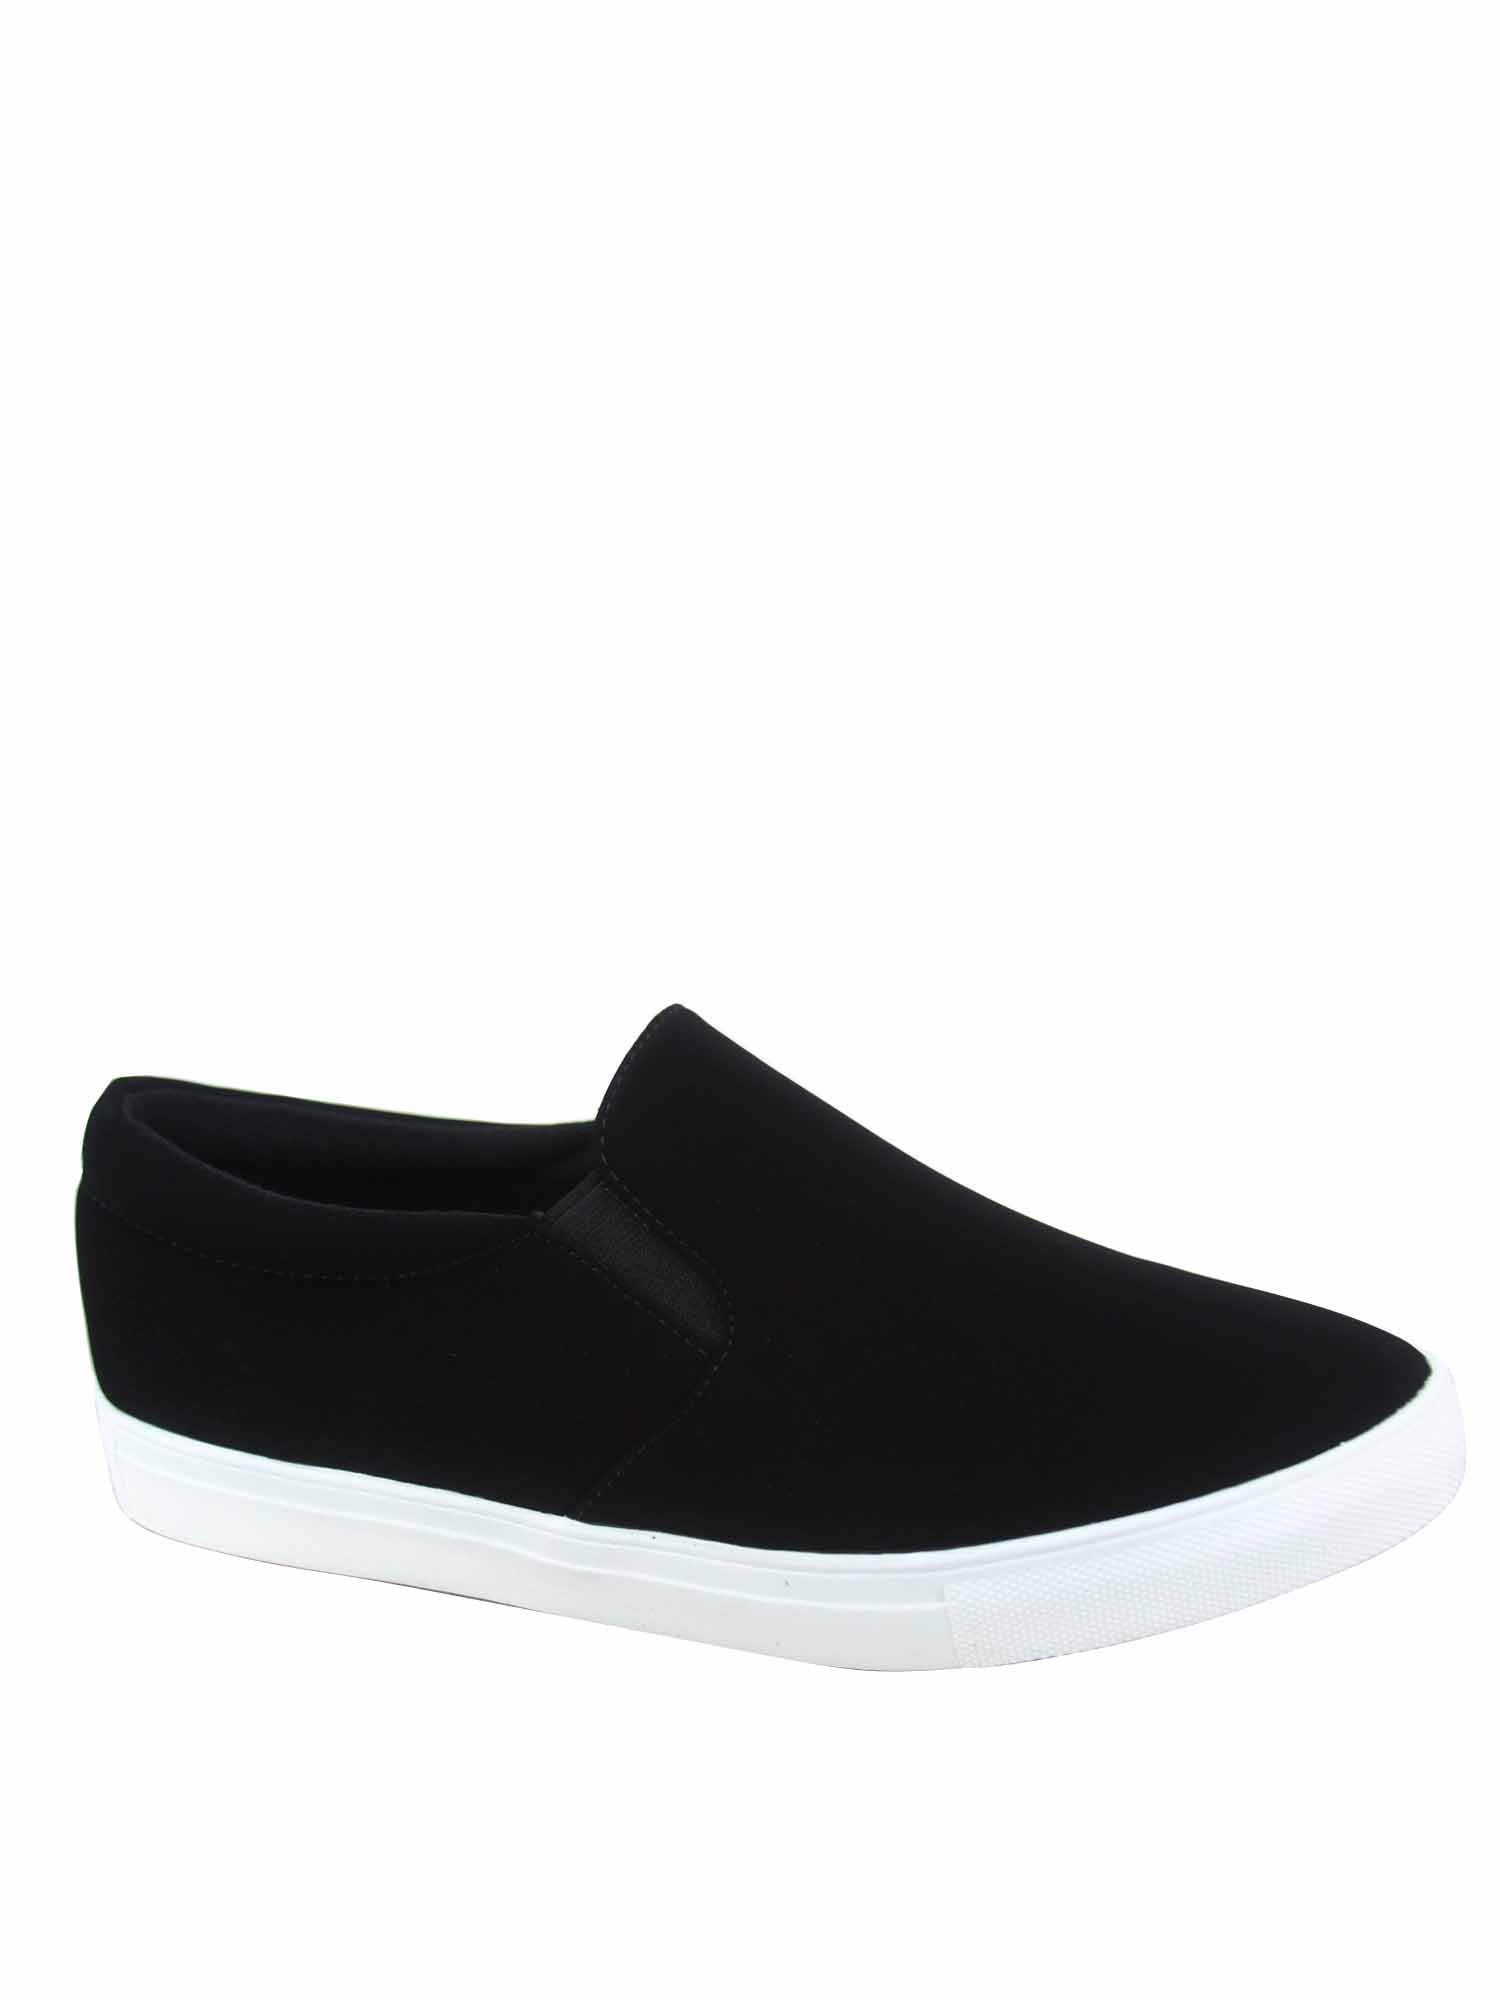 Design-1 Fashion Colors Prints Comfort Slip On Round Toe Flat Sneaker ...